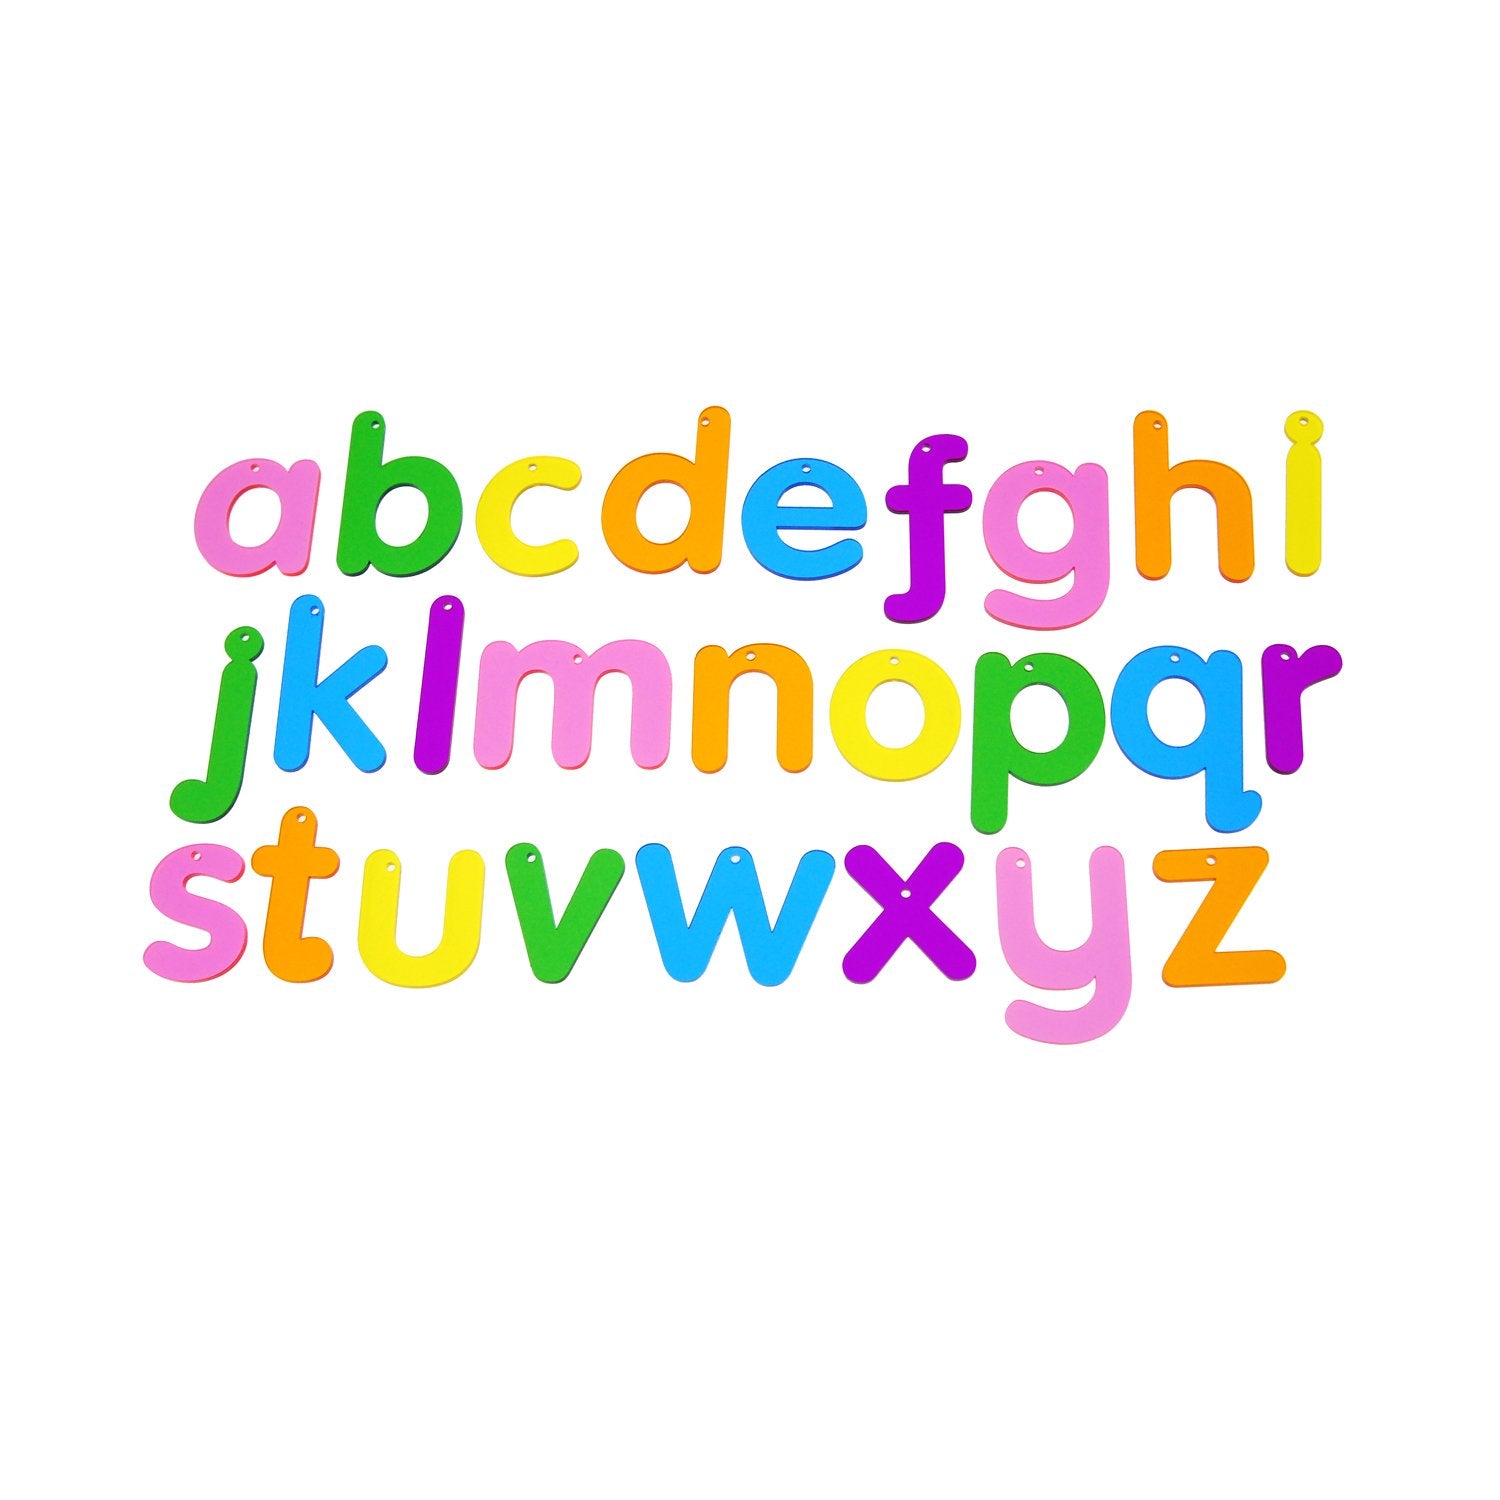 TickiT - Transparante gekleurde letters (26 stuks)